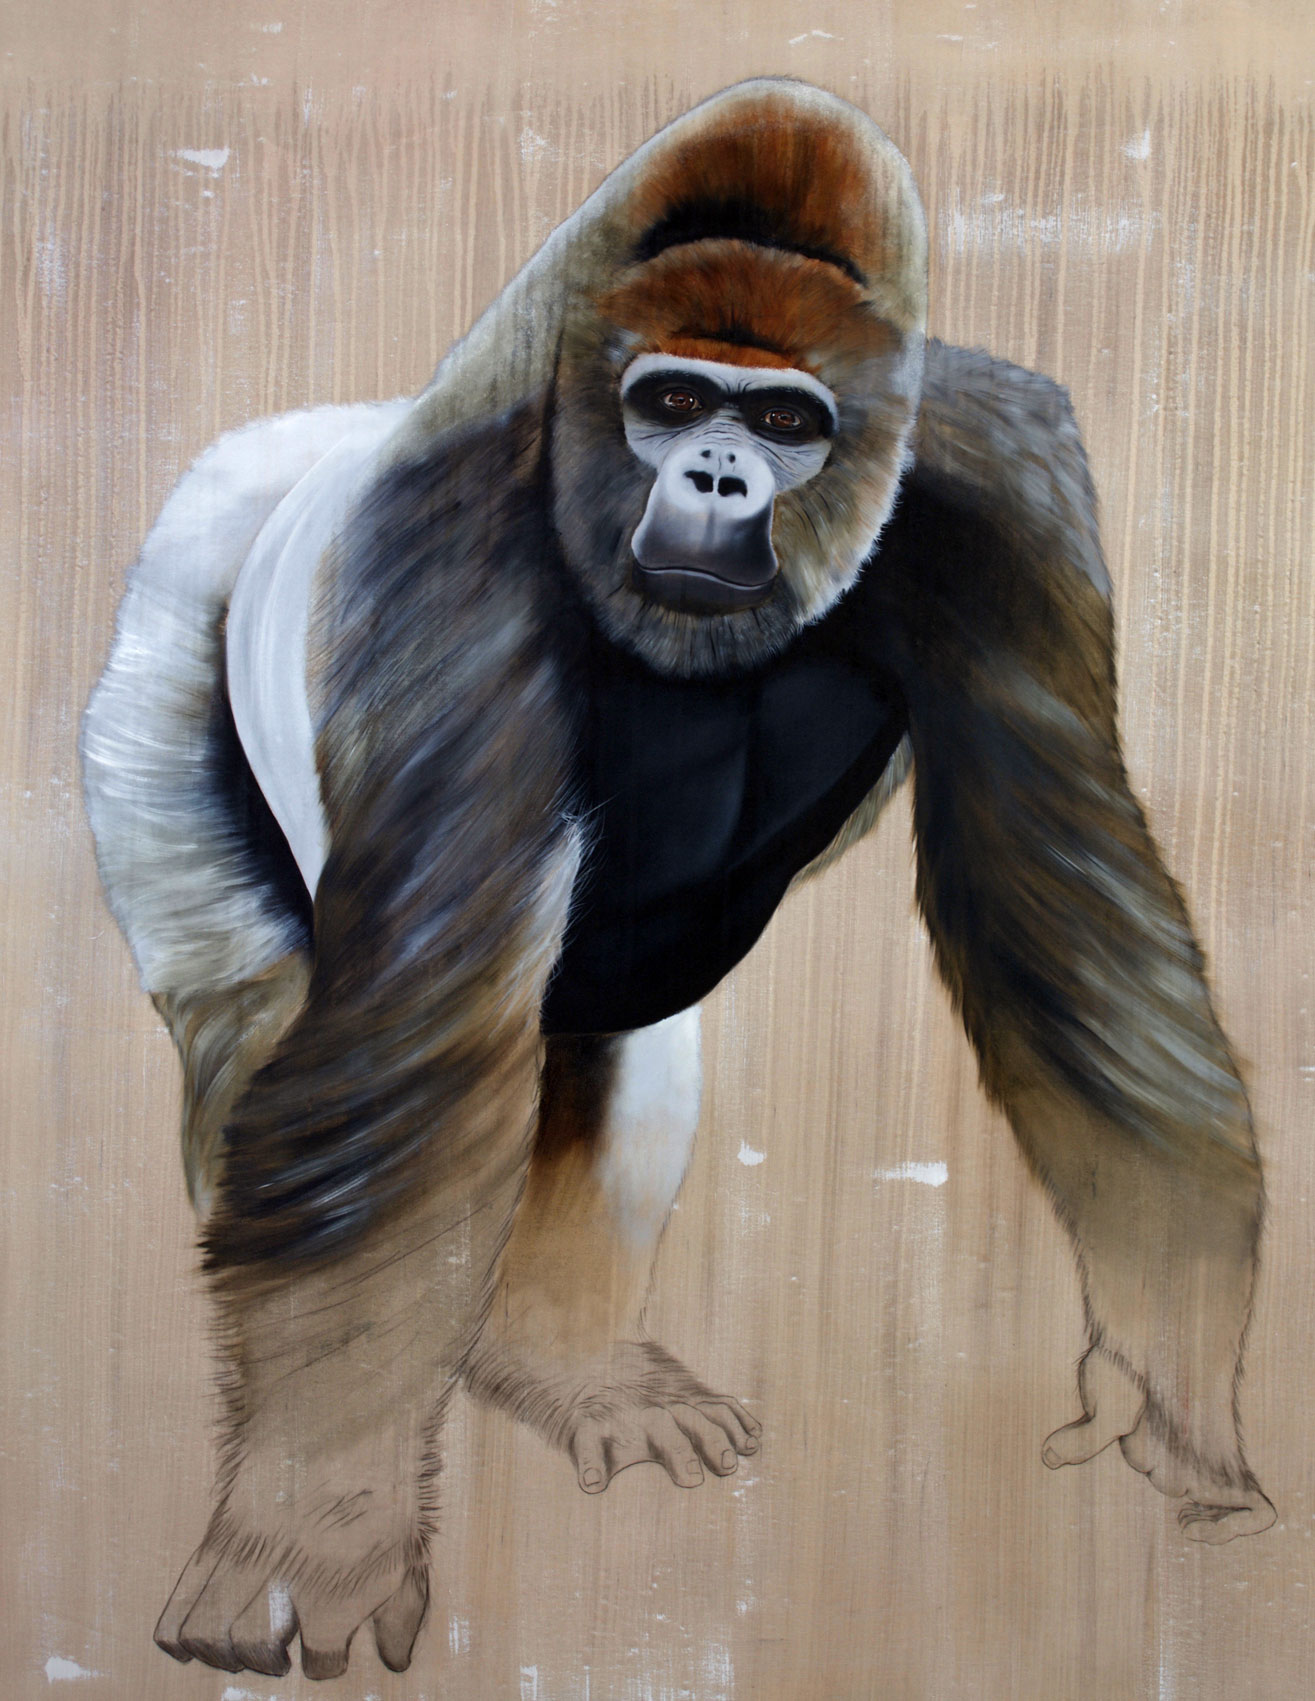 CENTRE METROPOLE MONACO gorilla-ape-silverback-threatened-endangered-extinction Thierry Bisch Contemporary painter animals painting art  nature biodiversity conservation 